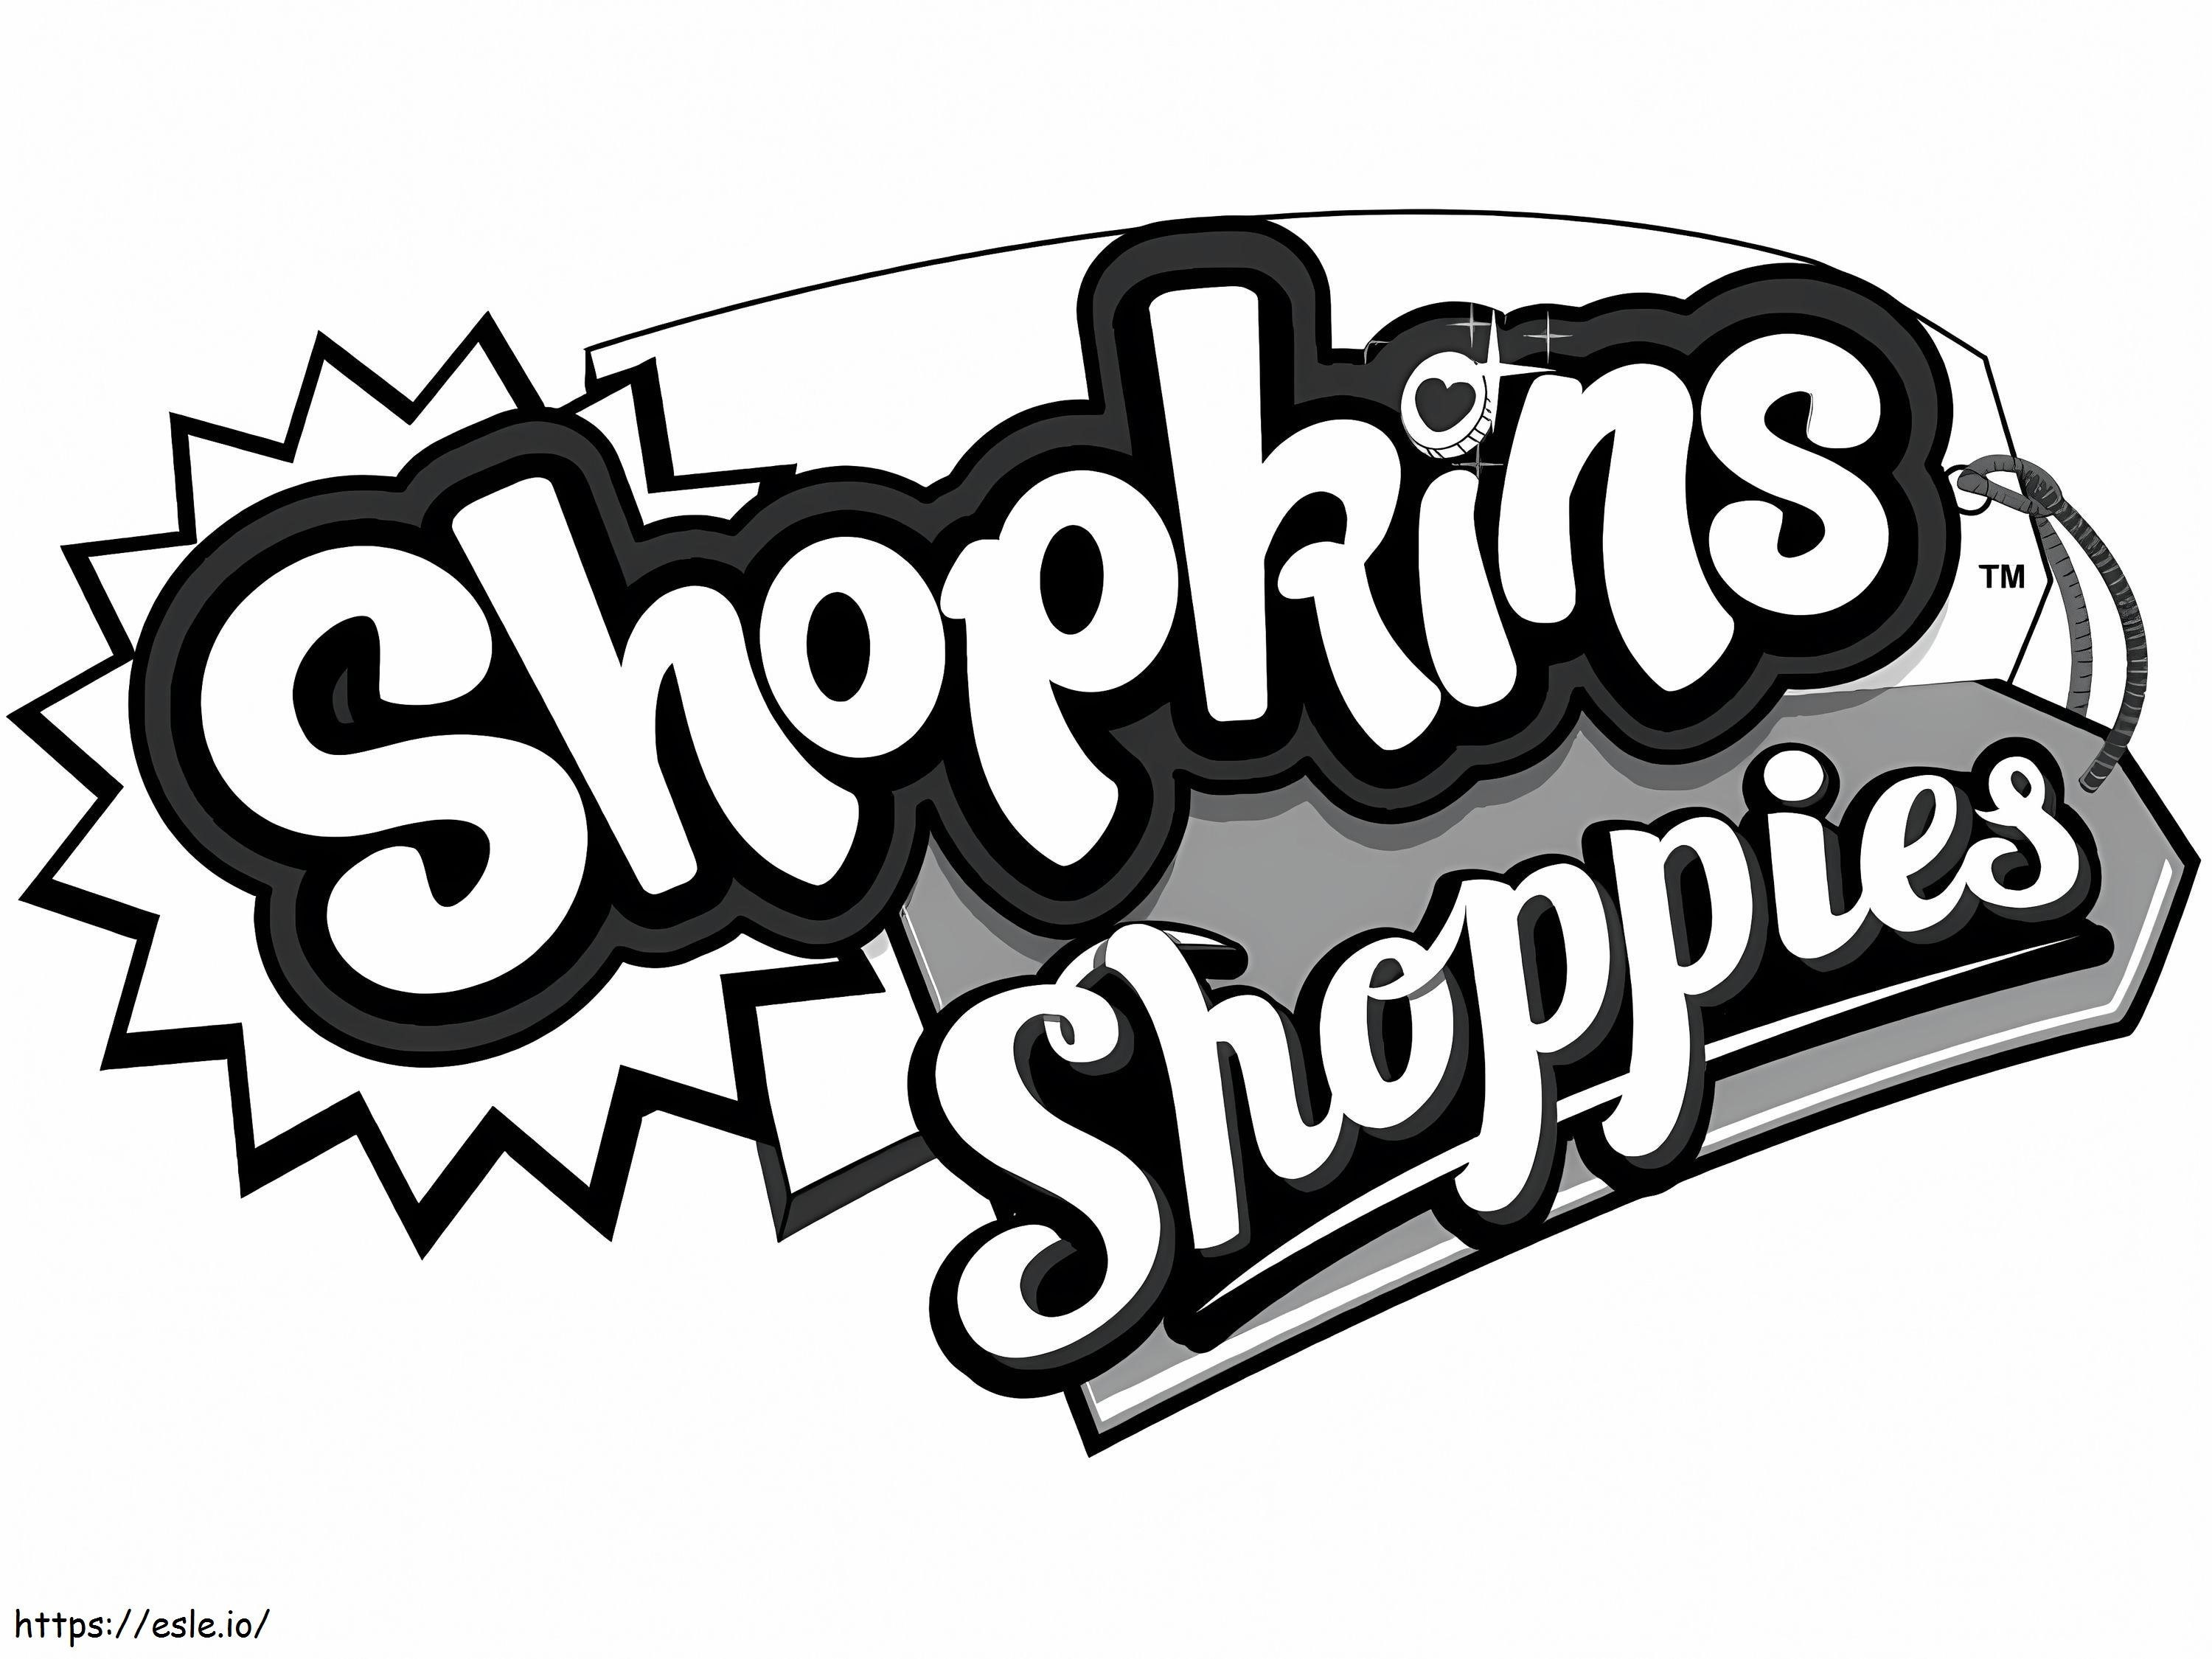 Logo Shopkins Shoppies de colorat